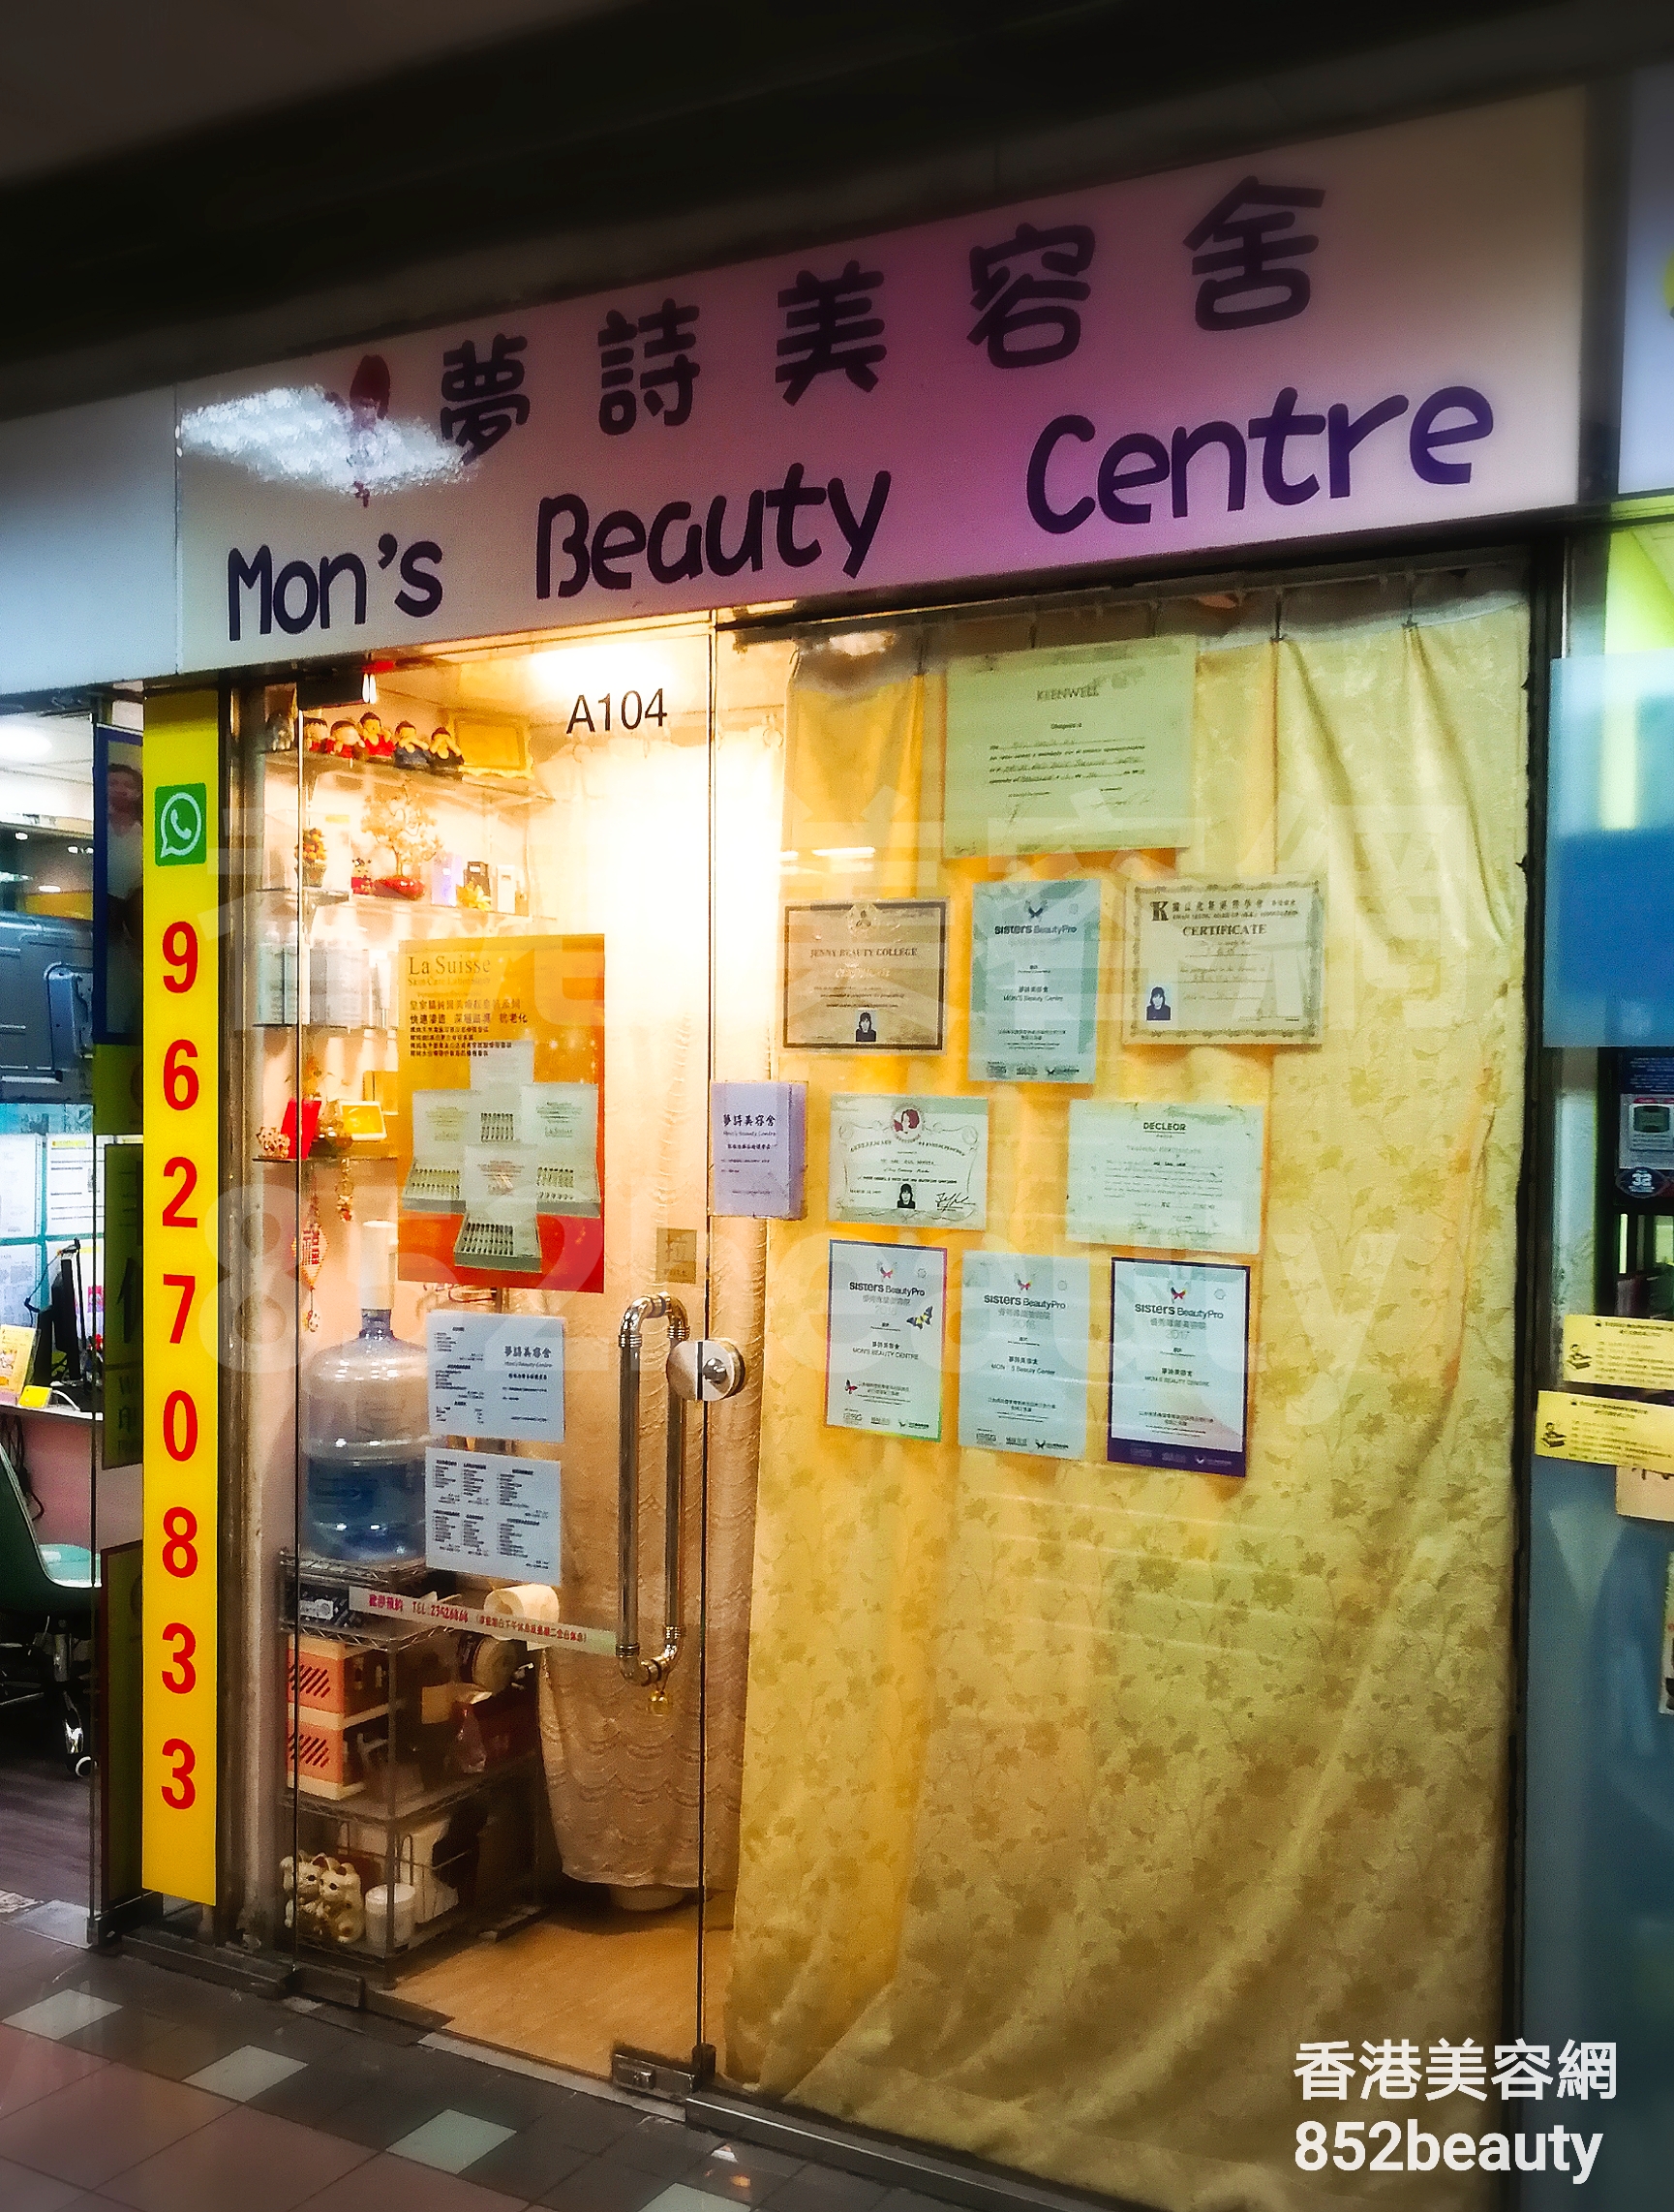 Eye Care: 夢詩美容舍 Mon's Beauty Centre